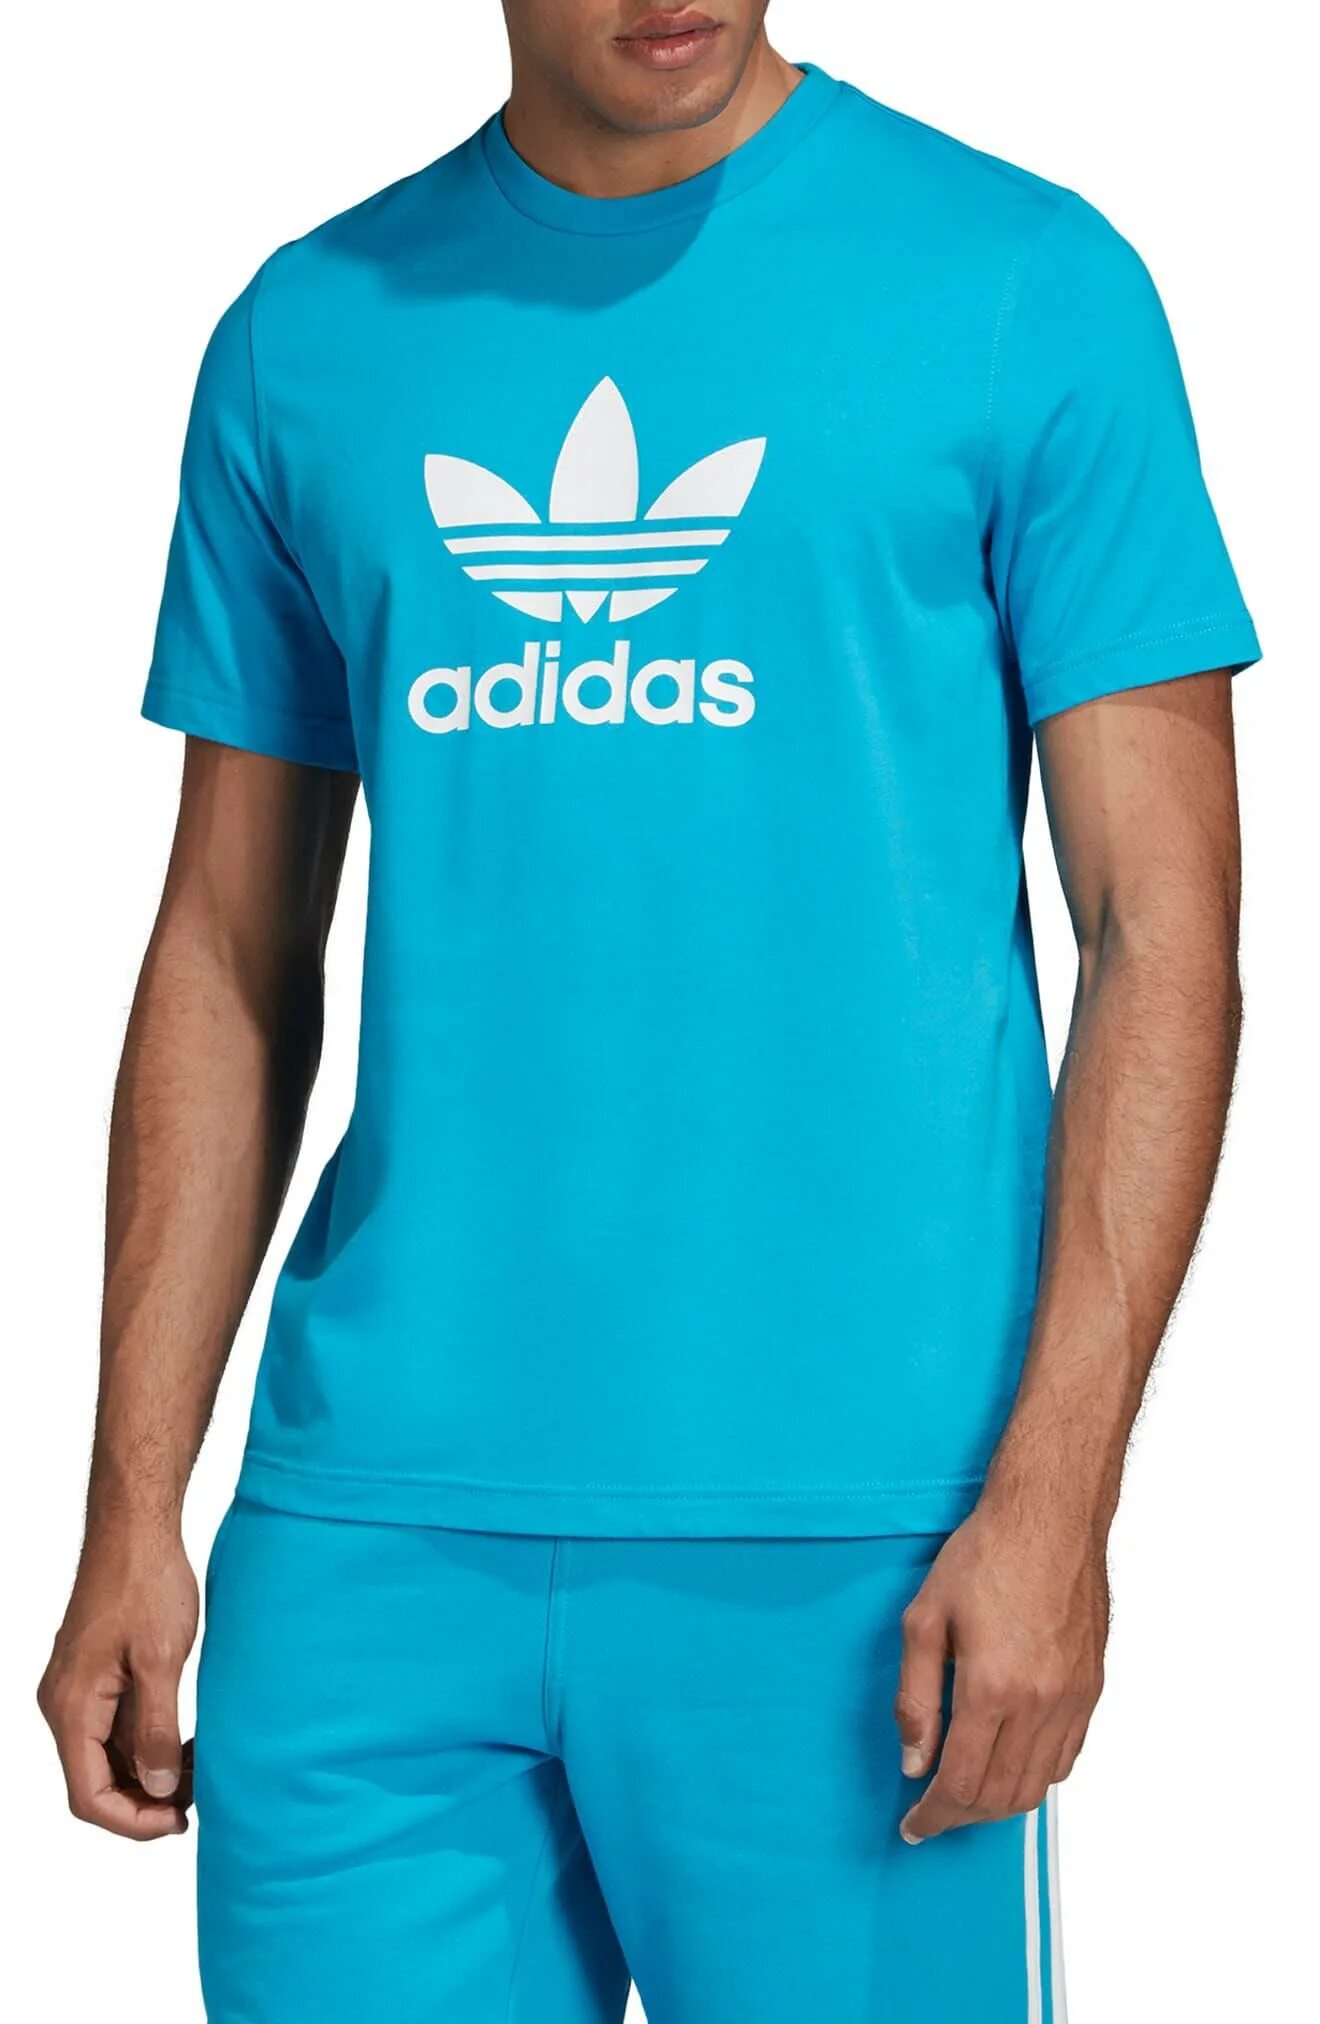 Adidas t Shirt Trefoil. Футболка адидас оригинал голубая. Blue adidas Originals Shirt Collab. Футболка адидас мужская синяя. Футболка адидас мужская оригинал купить